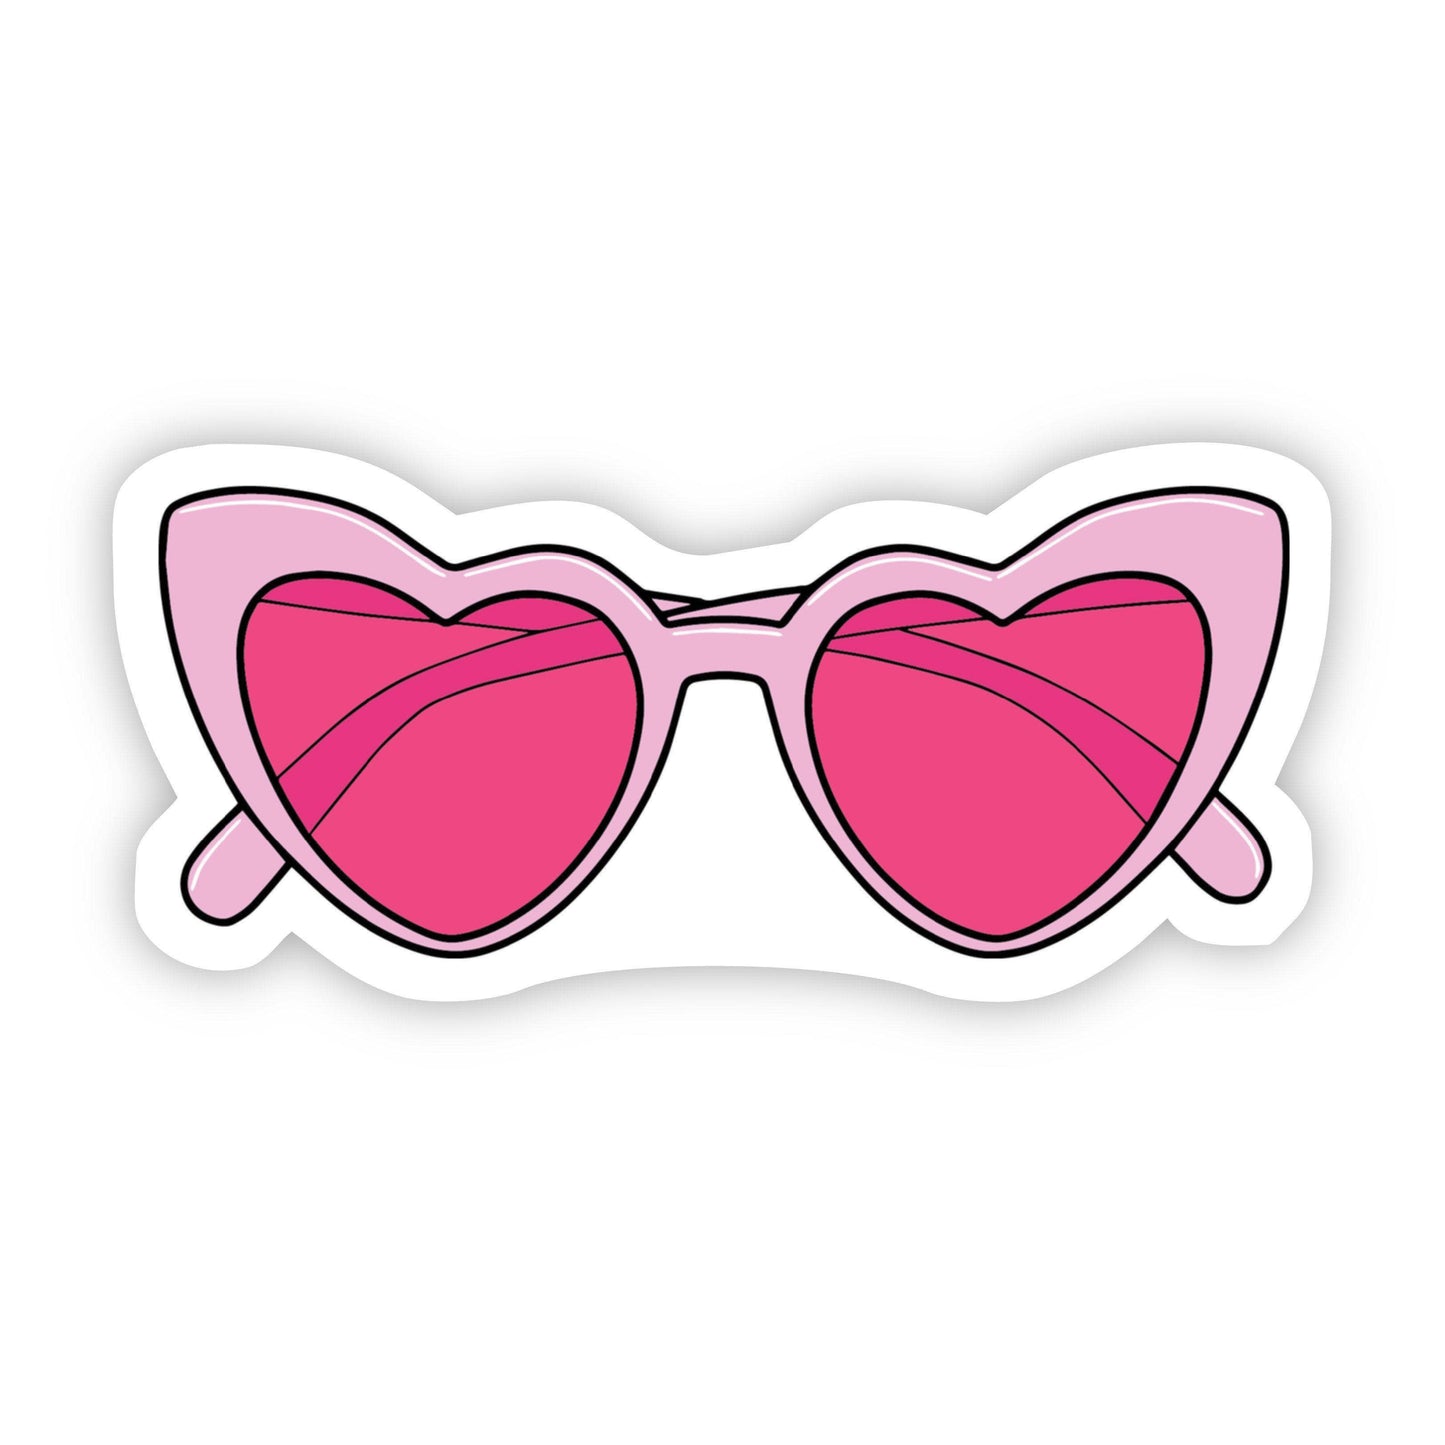 "Pink Heart Sunglasses" Aesthetic Sticker